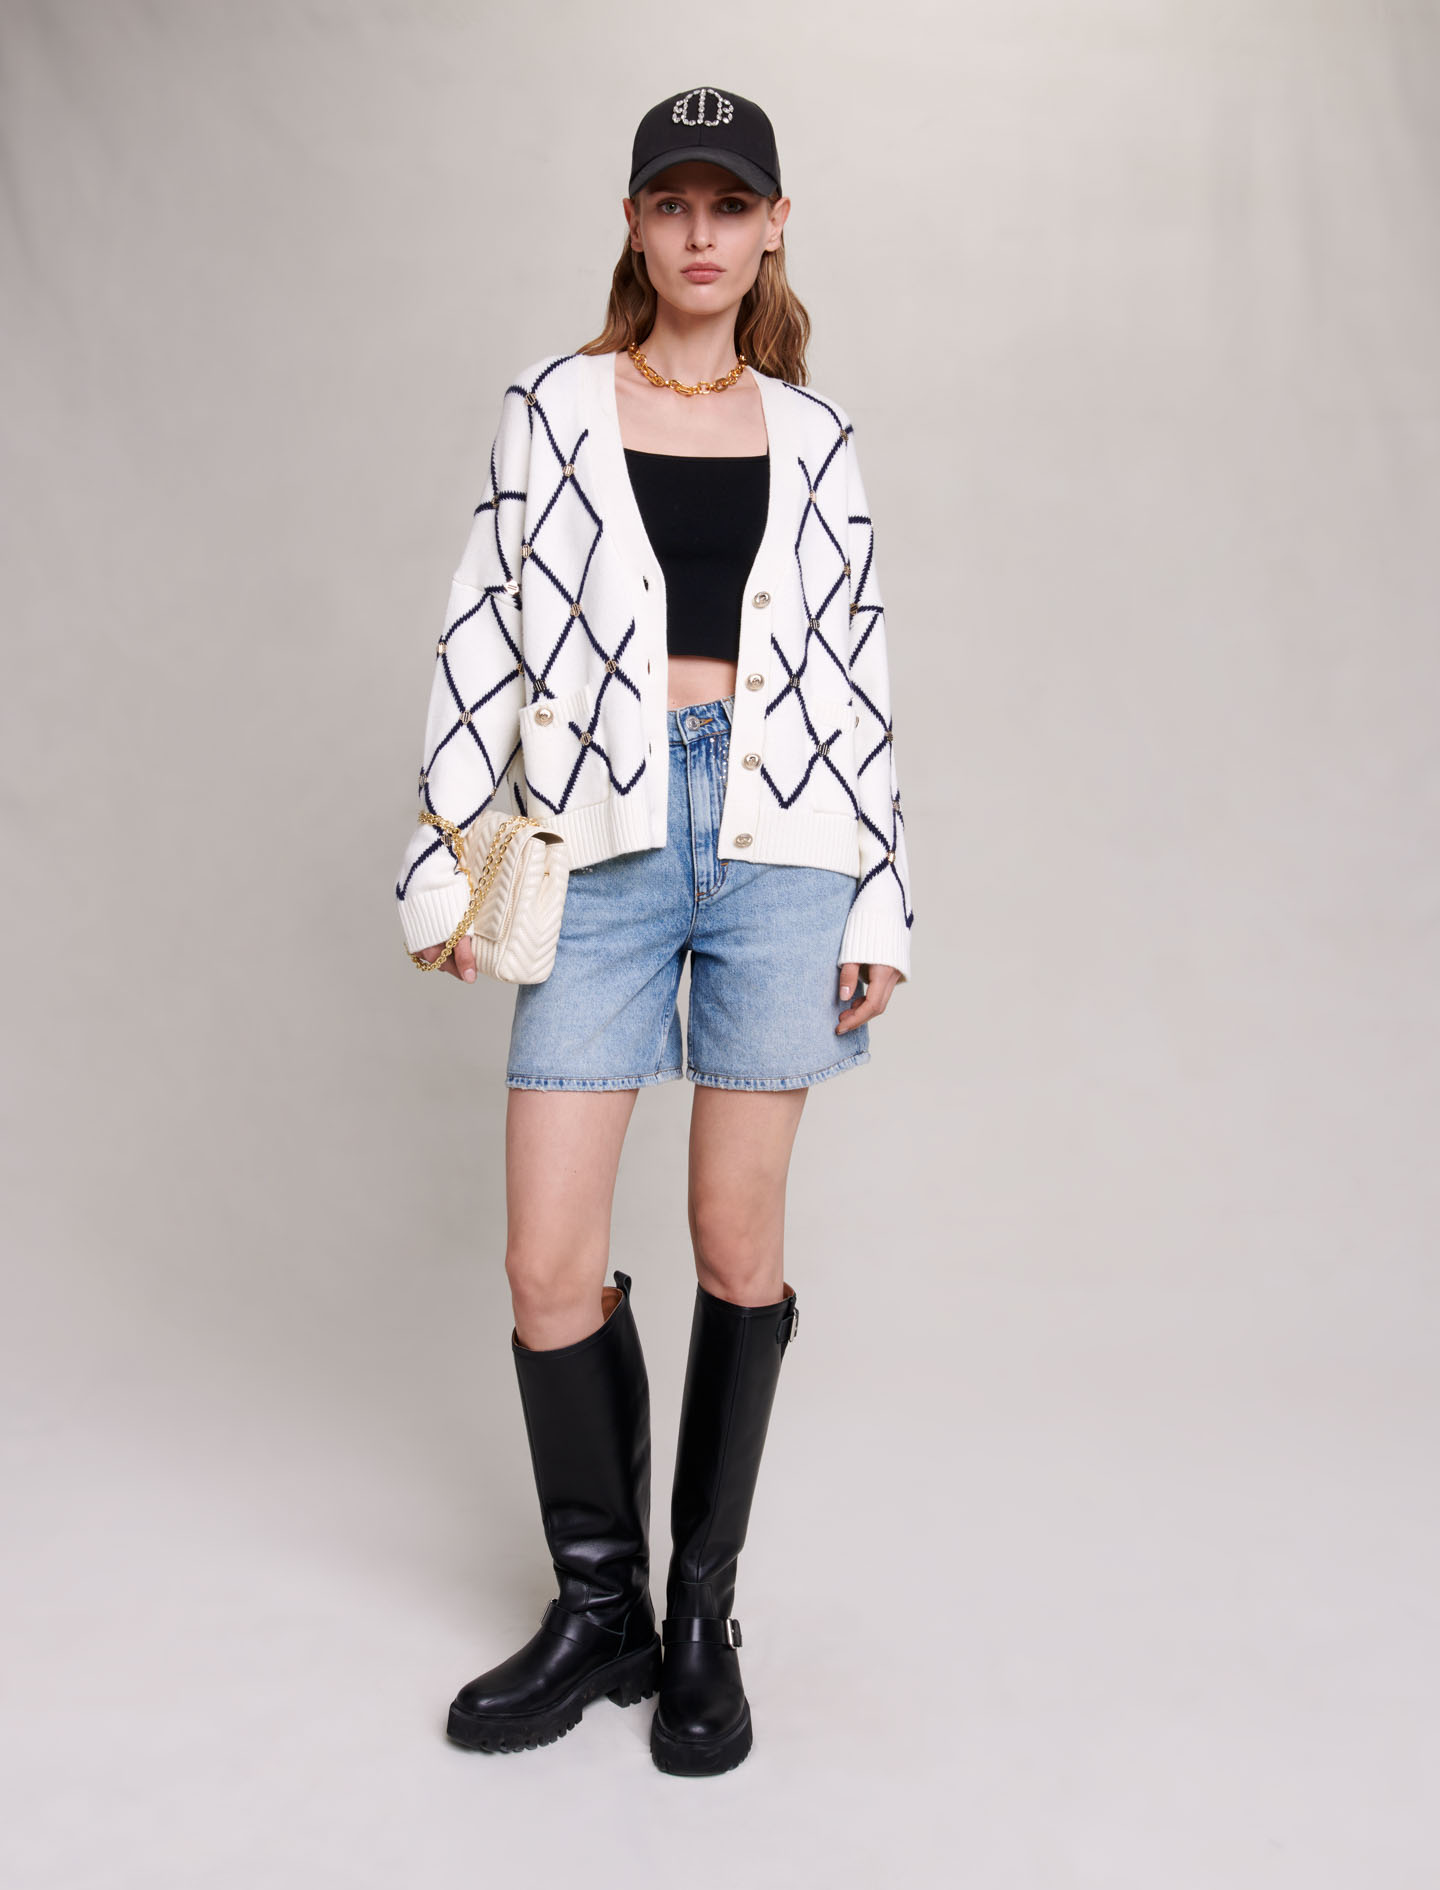 Maje Woman's acrylic, Diamond pattern knitted cardigan for Fall/Winter, in color Ecru / Beige